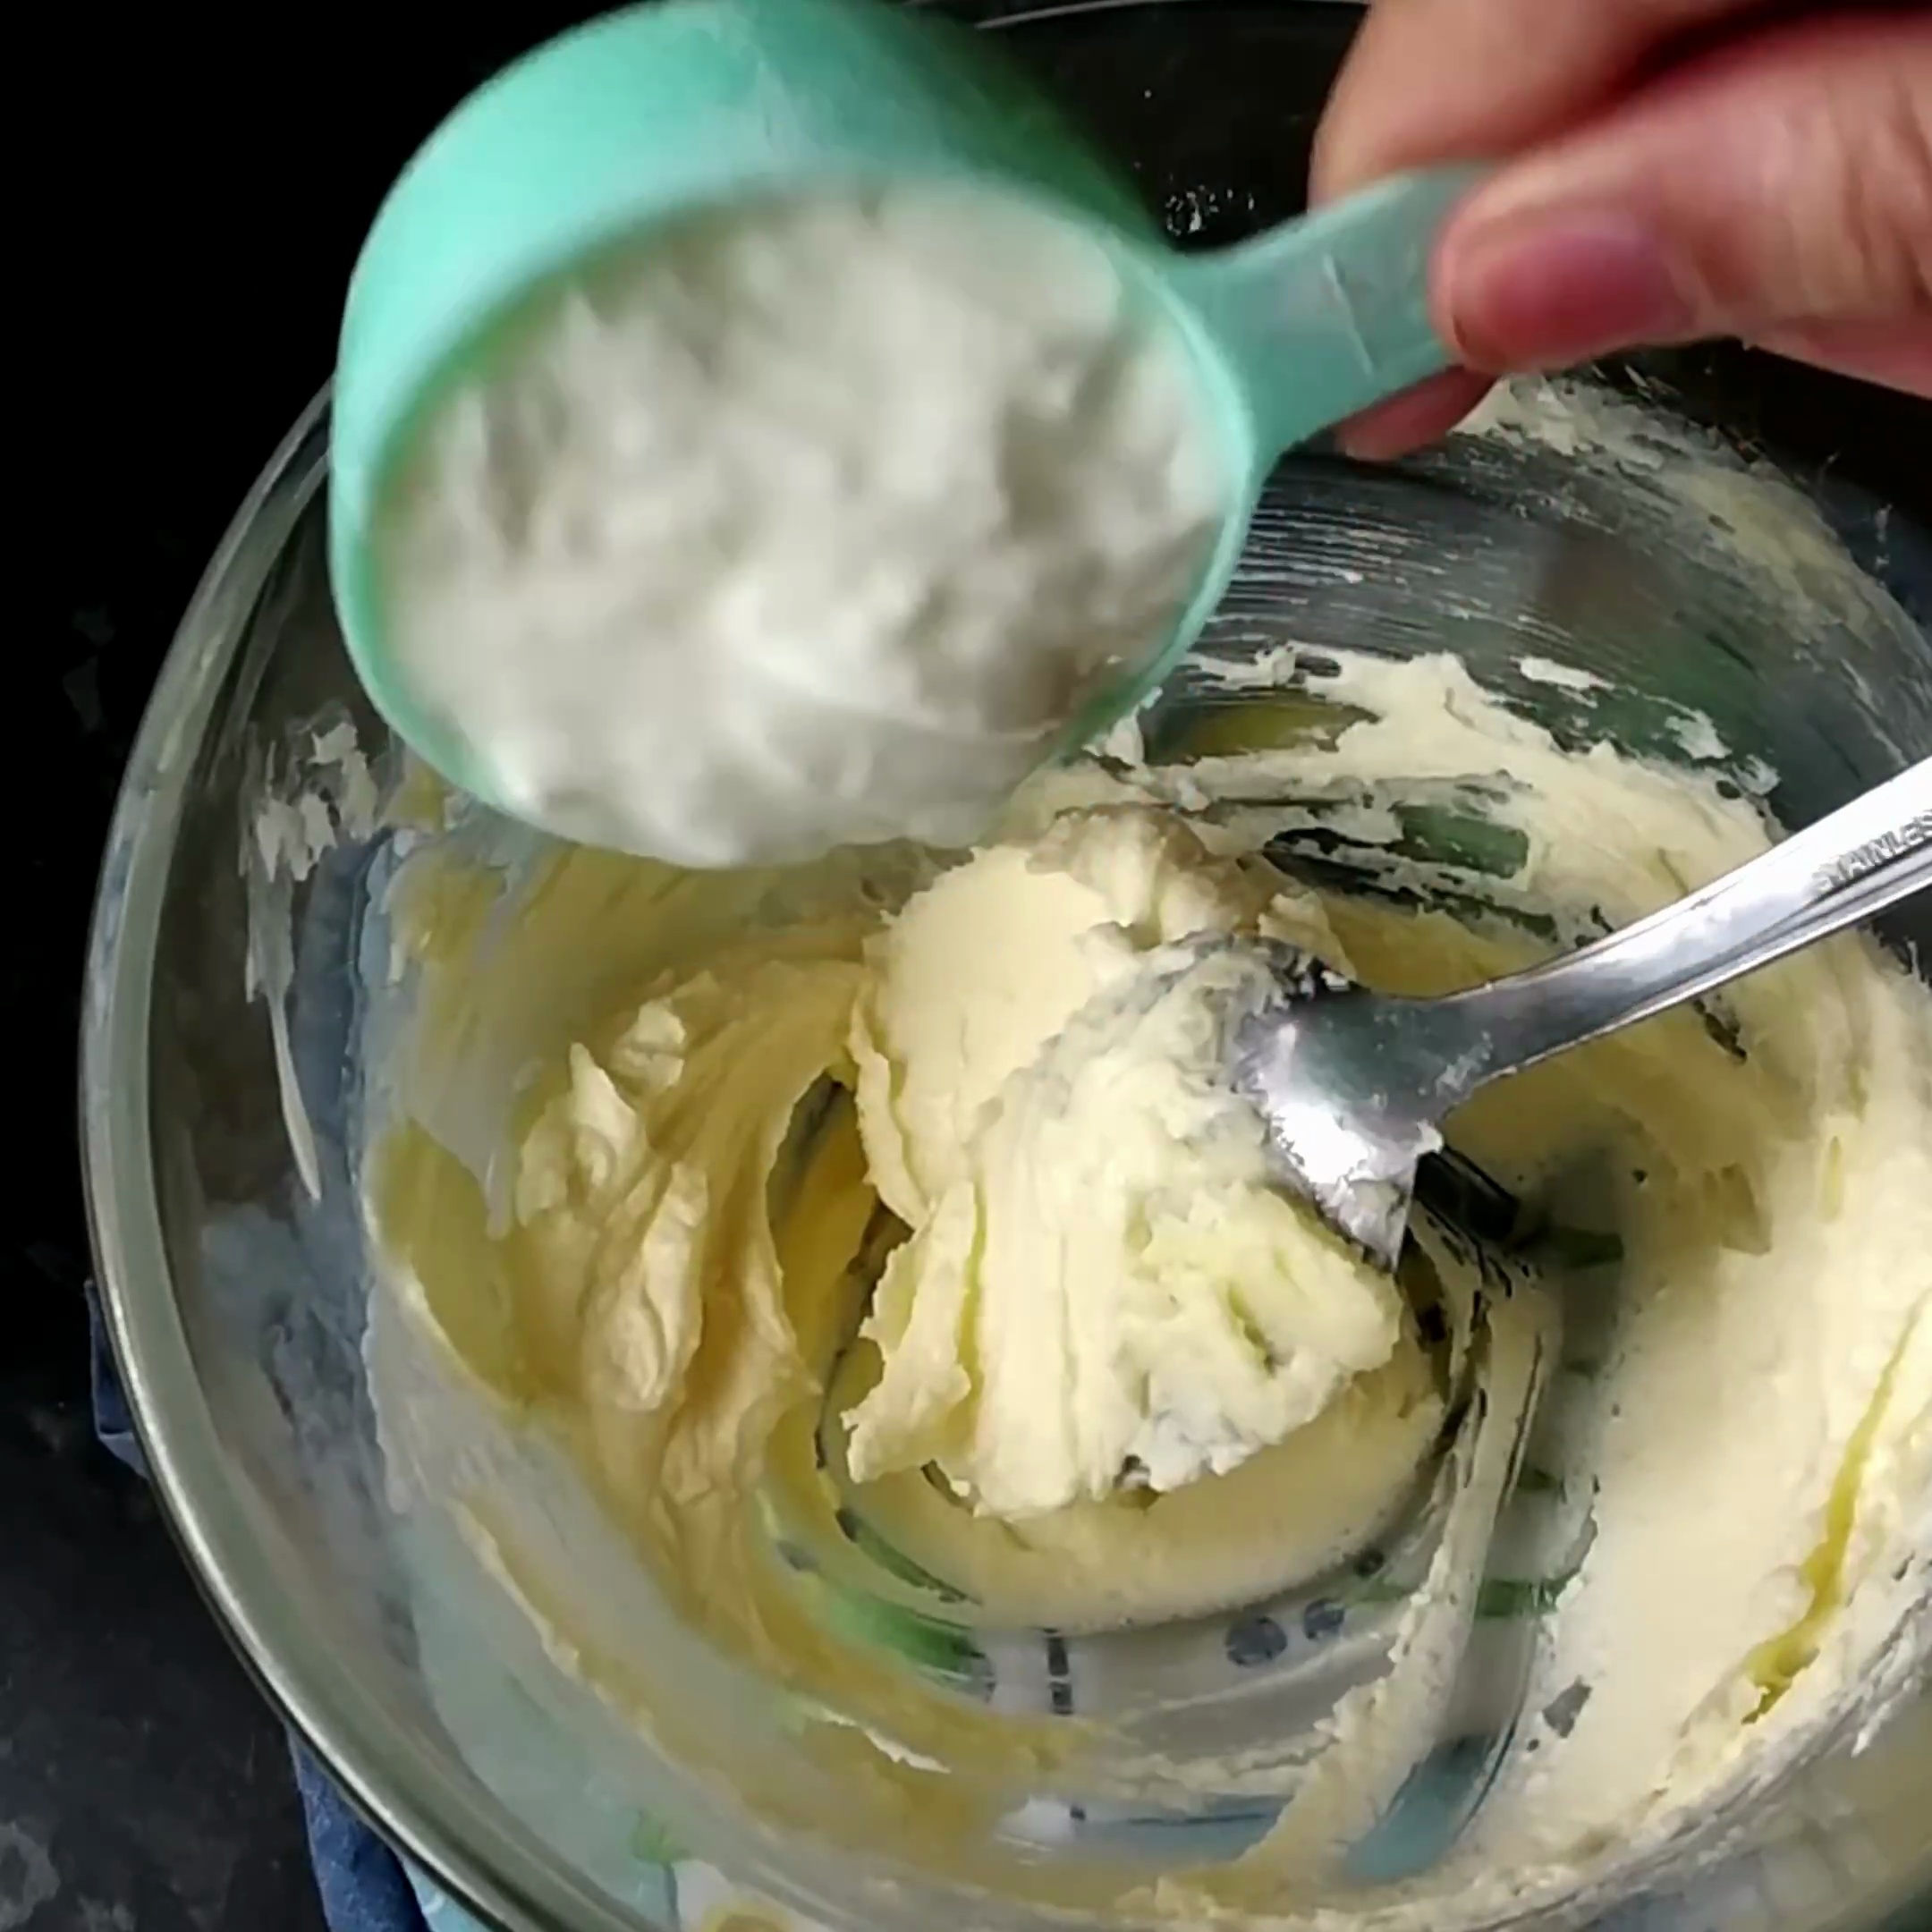 Step 2 - Add yogurt and mix well.